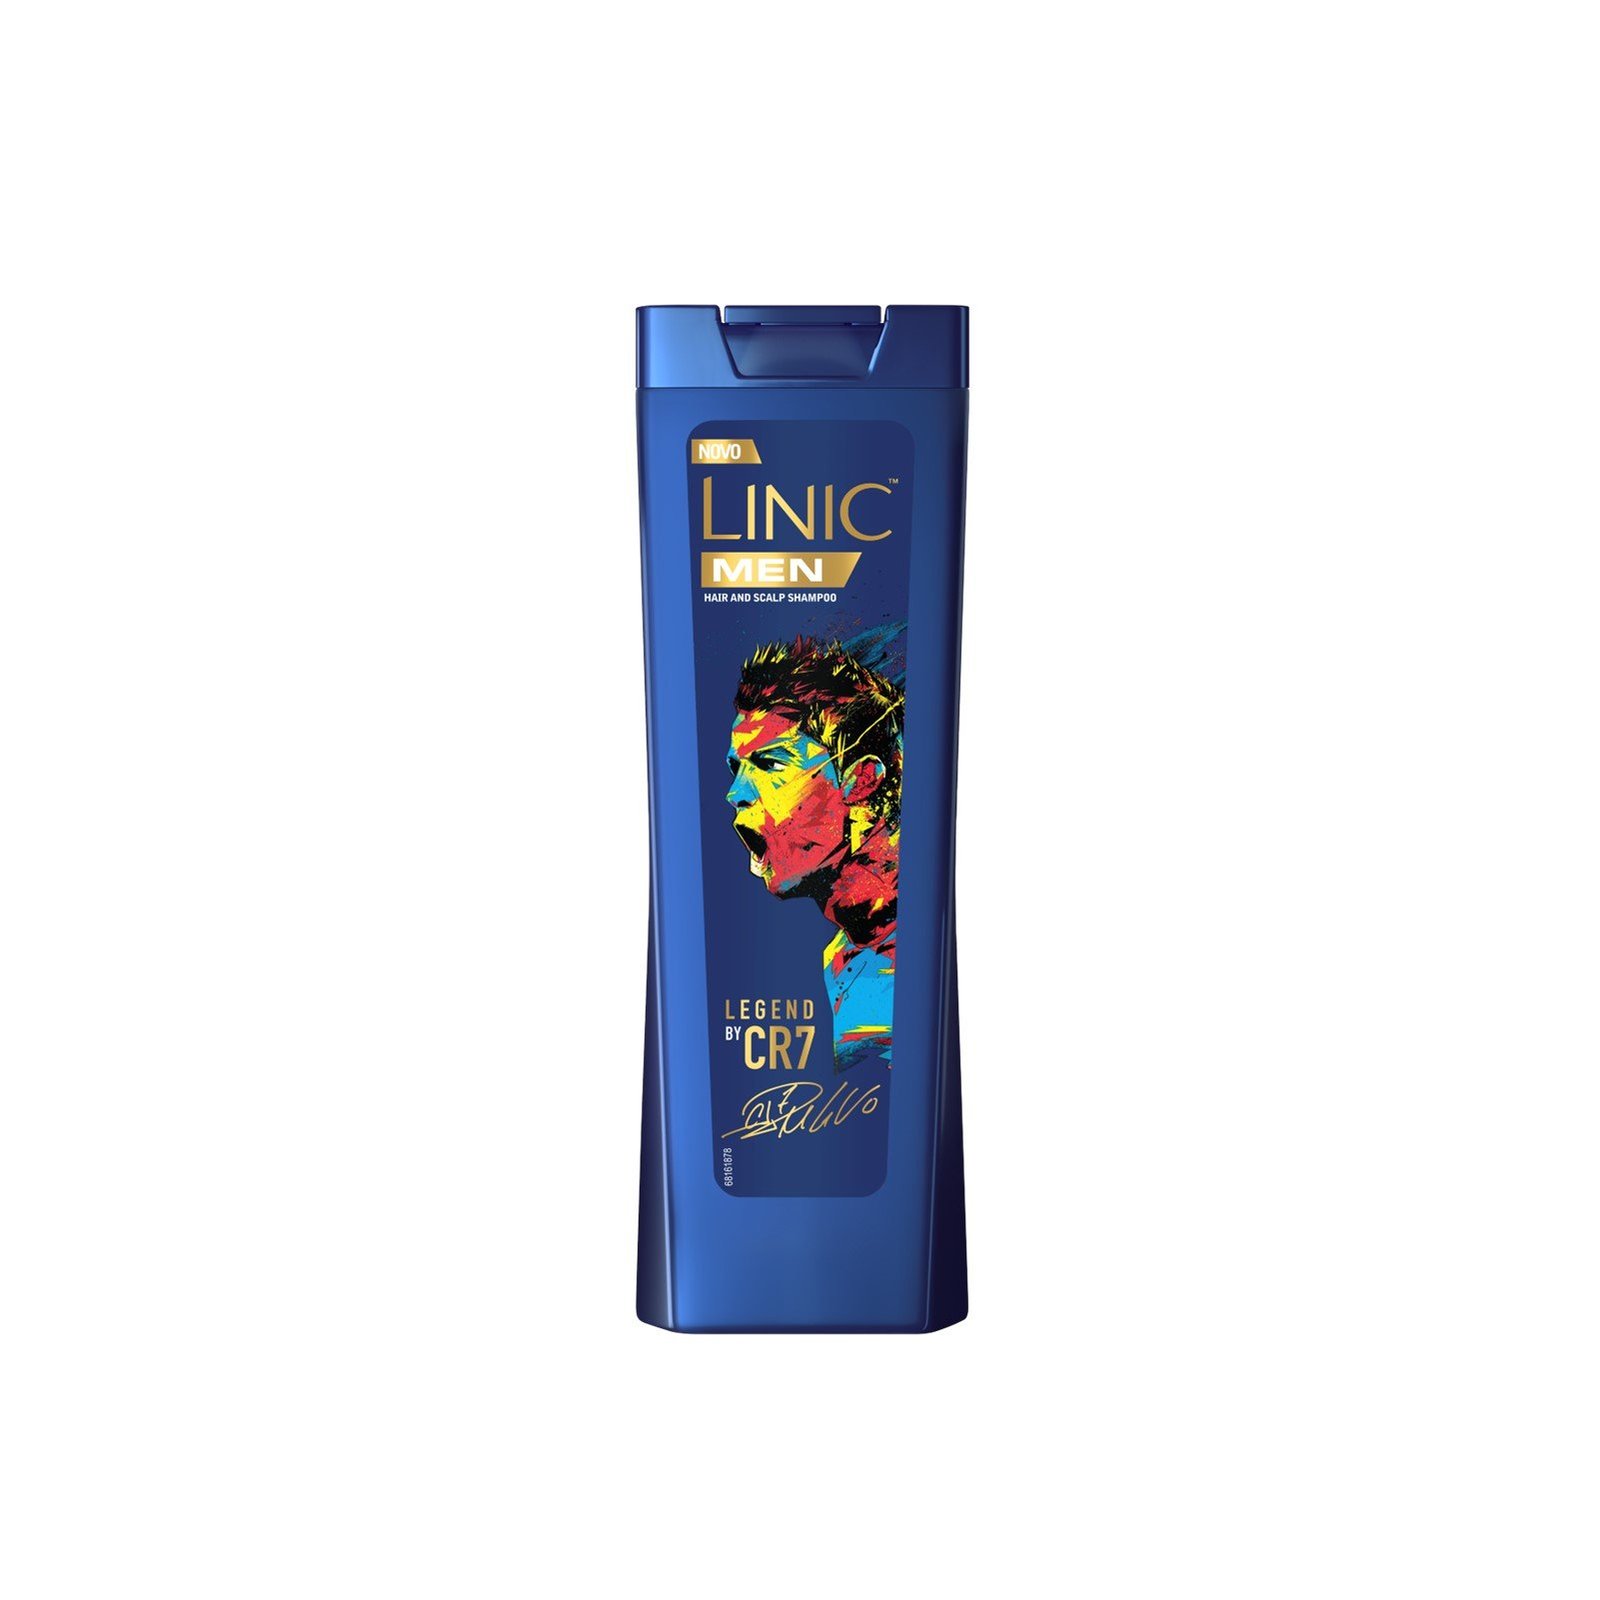 Linic Men Legend By CR7 Hair And Scalp Shampoo 225ml (7.6 fl oz)